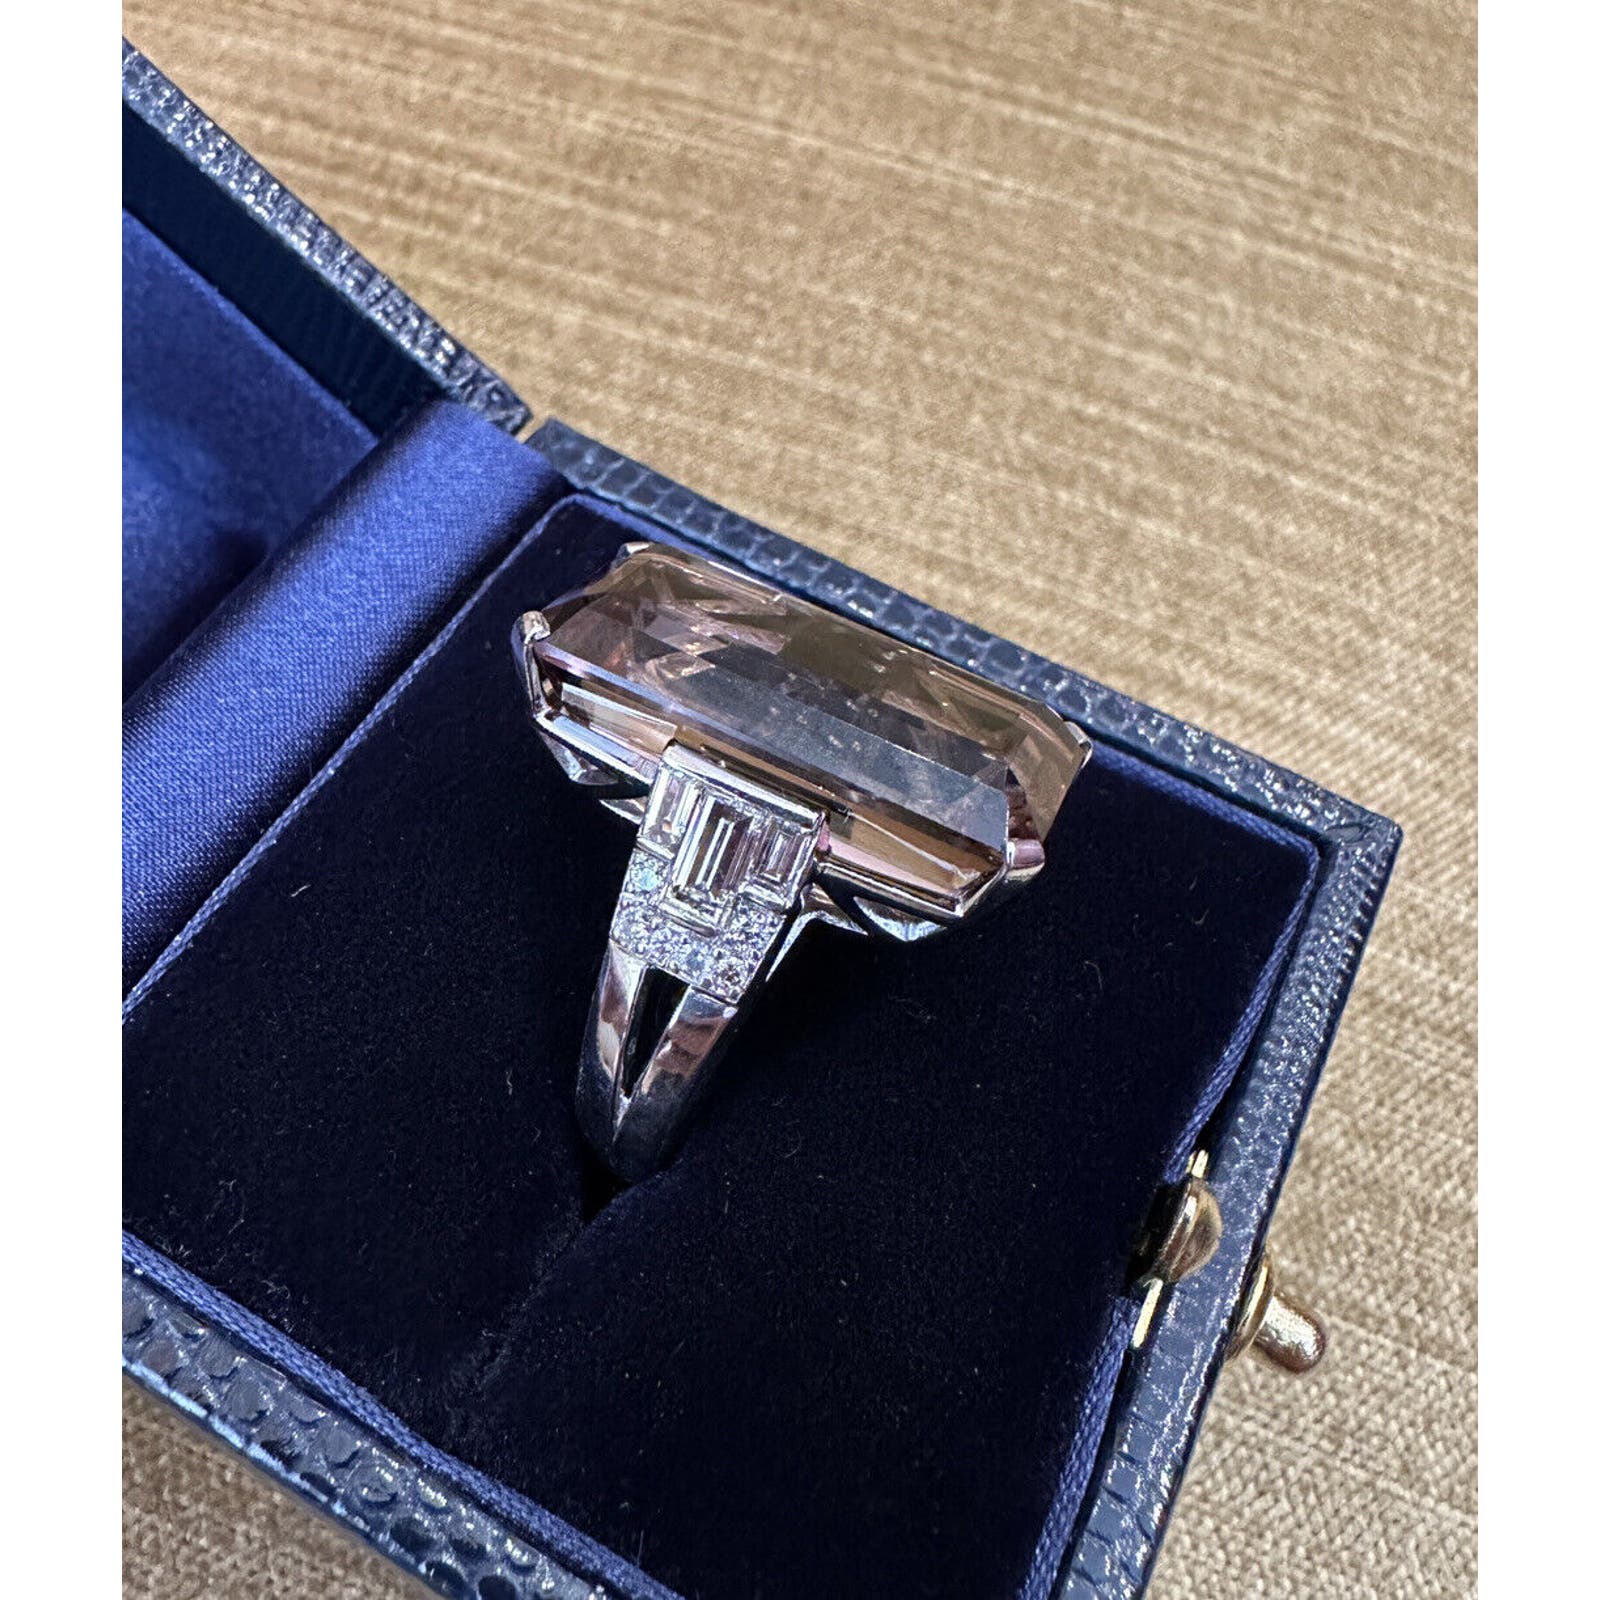 Large 26.97 carat Tourmaline and Diamond Ring in 18k White Gold - HM2415E